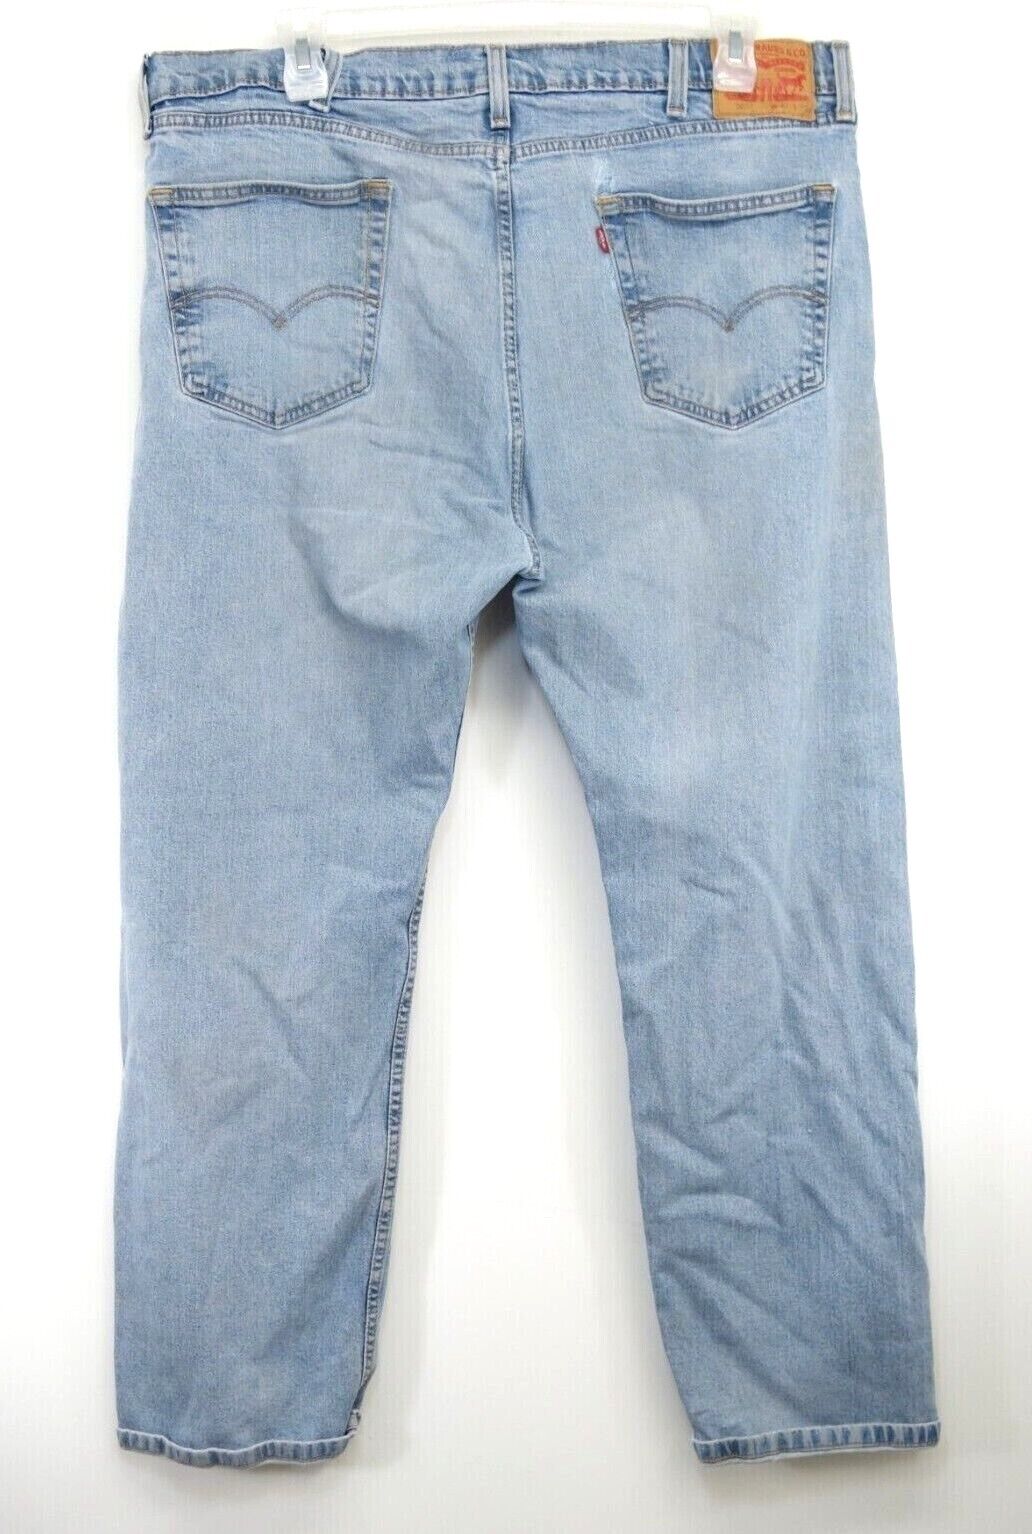 Levi\'s Mens 505 1765 Regular Fit Straight Leg Stonewash Blue Denim Jeans 42 x 30